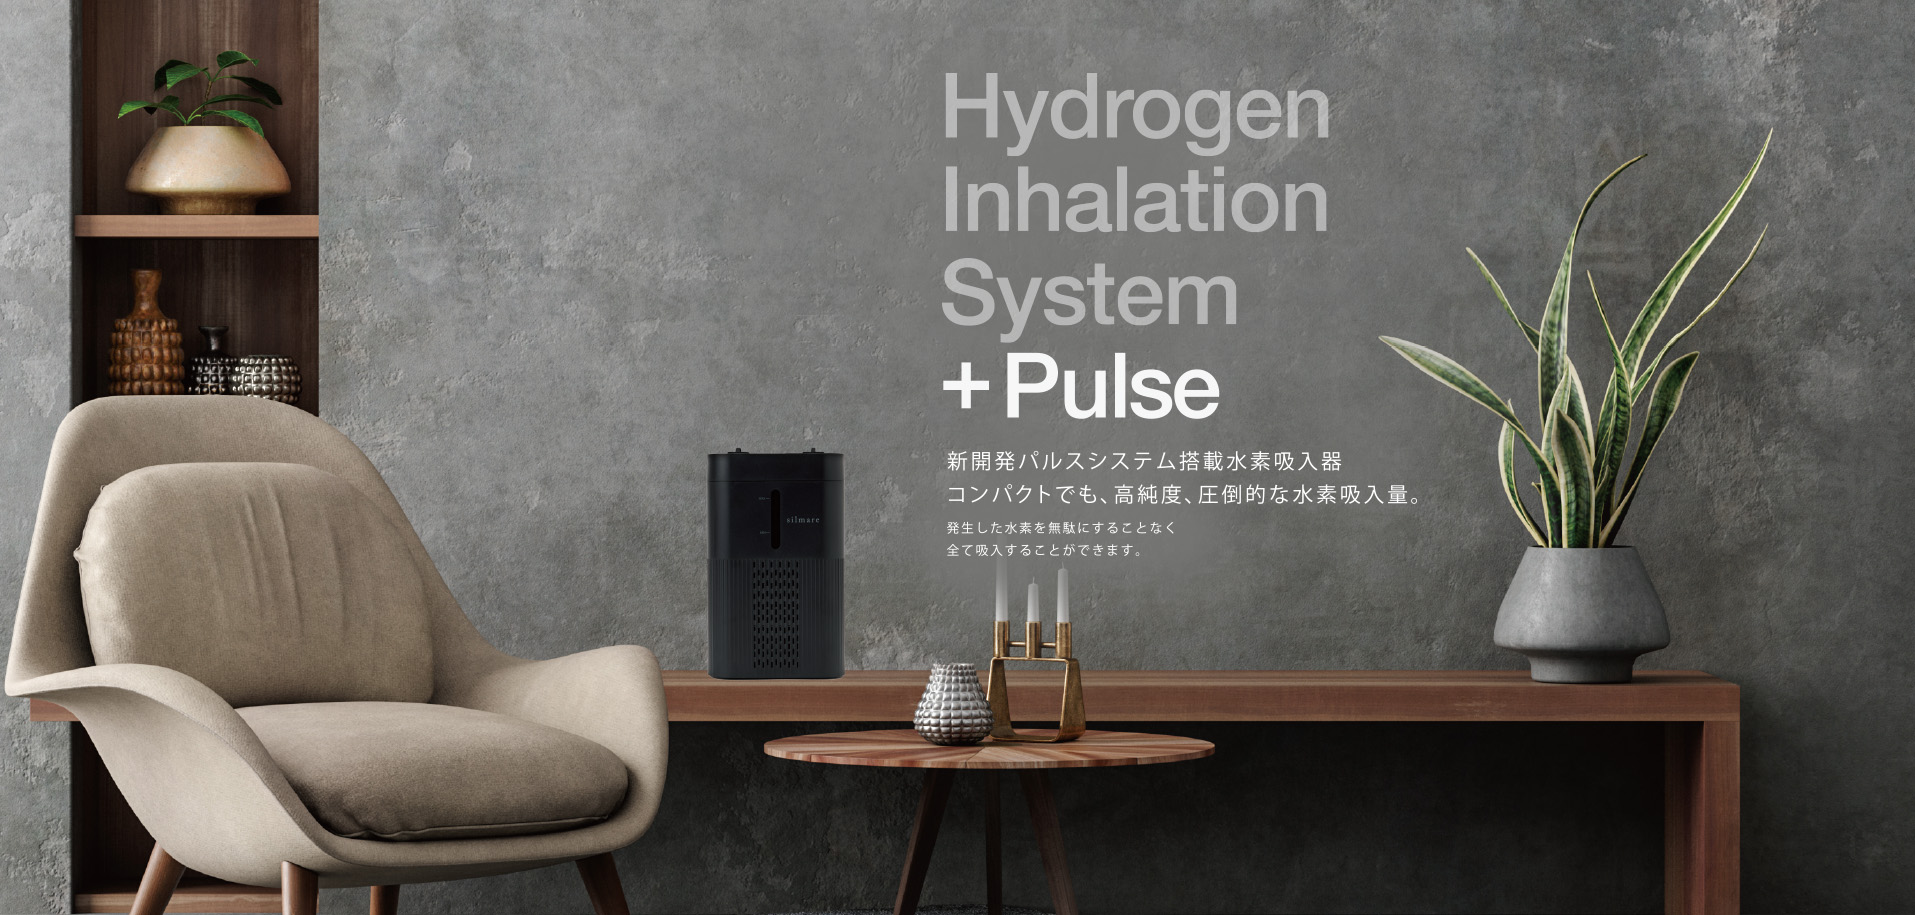 Hydrogen Inhalation System +Plues 新開発パルスシステム搭載水素吸入器 コンパクトでも、高純度、圧倒的な水素吸入器。